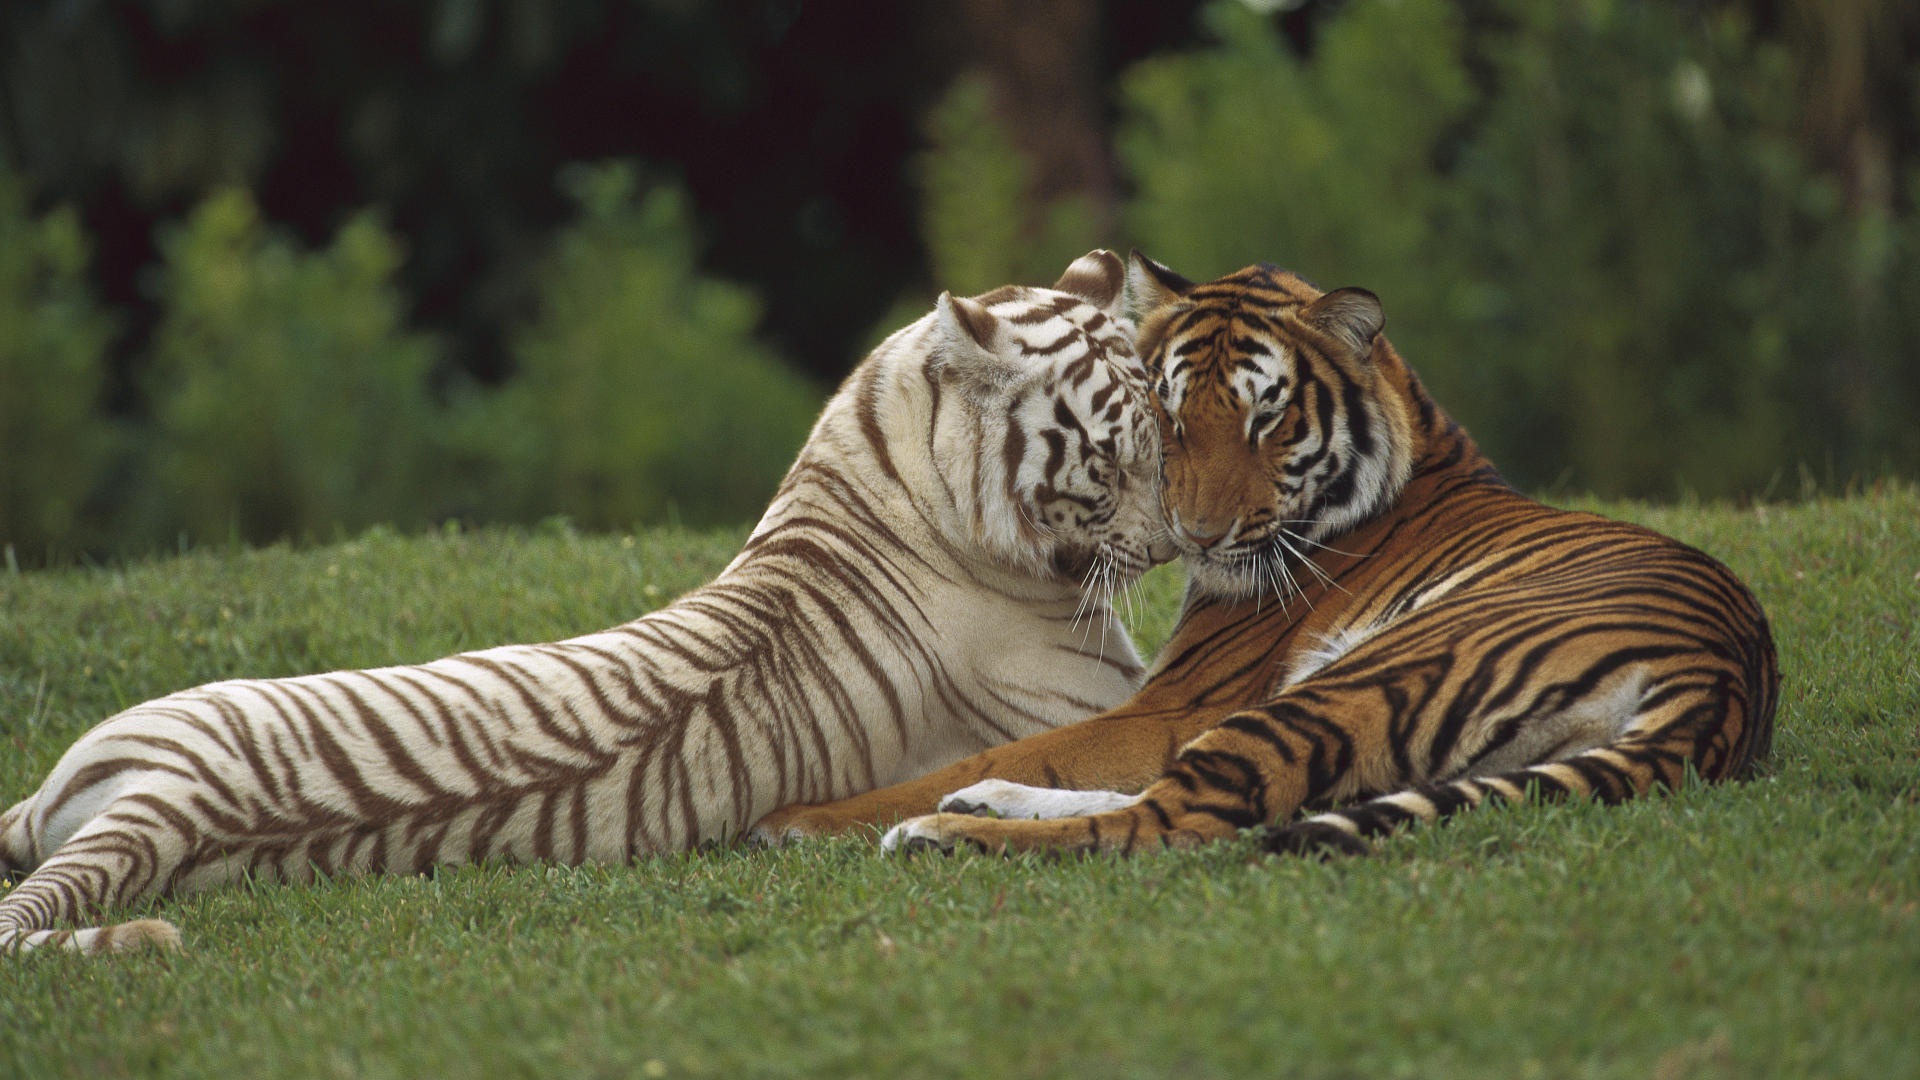  White Tiger Wallpaper Desktop 8 image and save image as click save